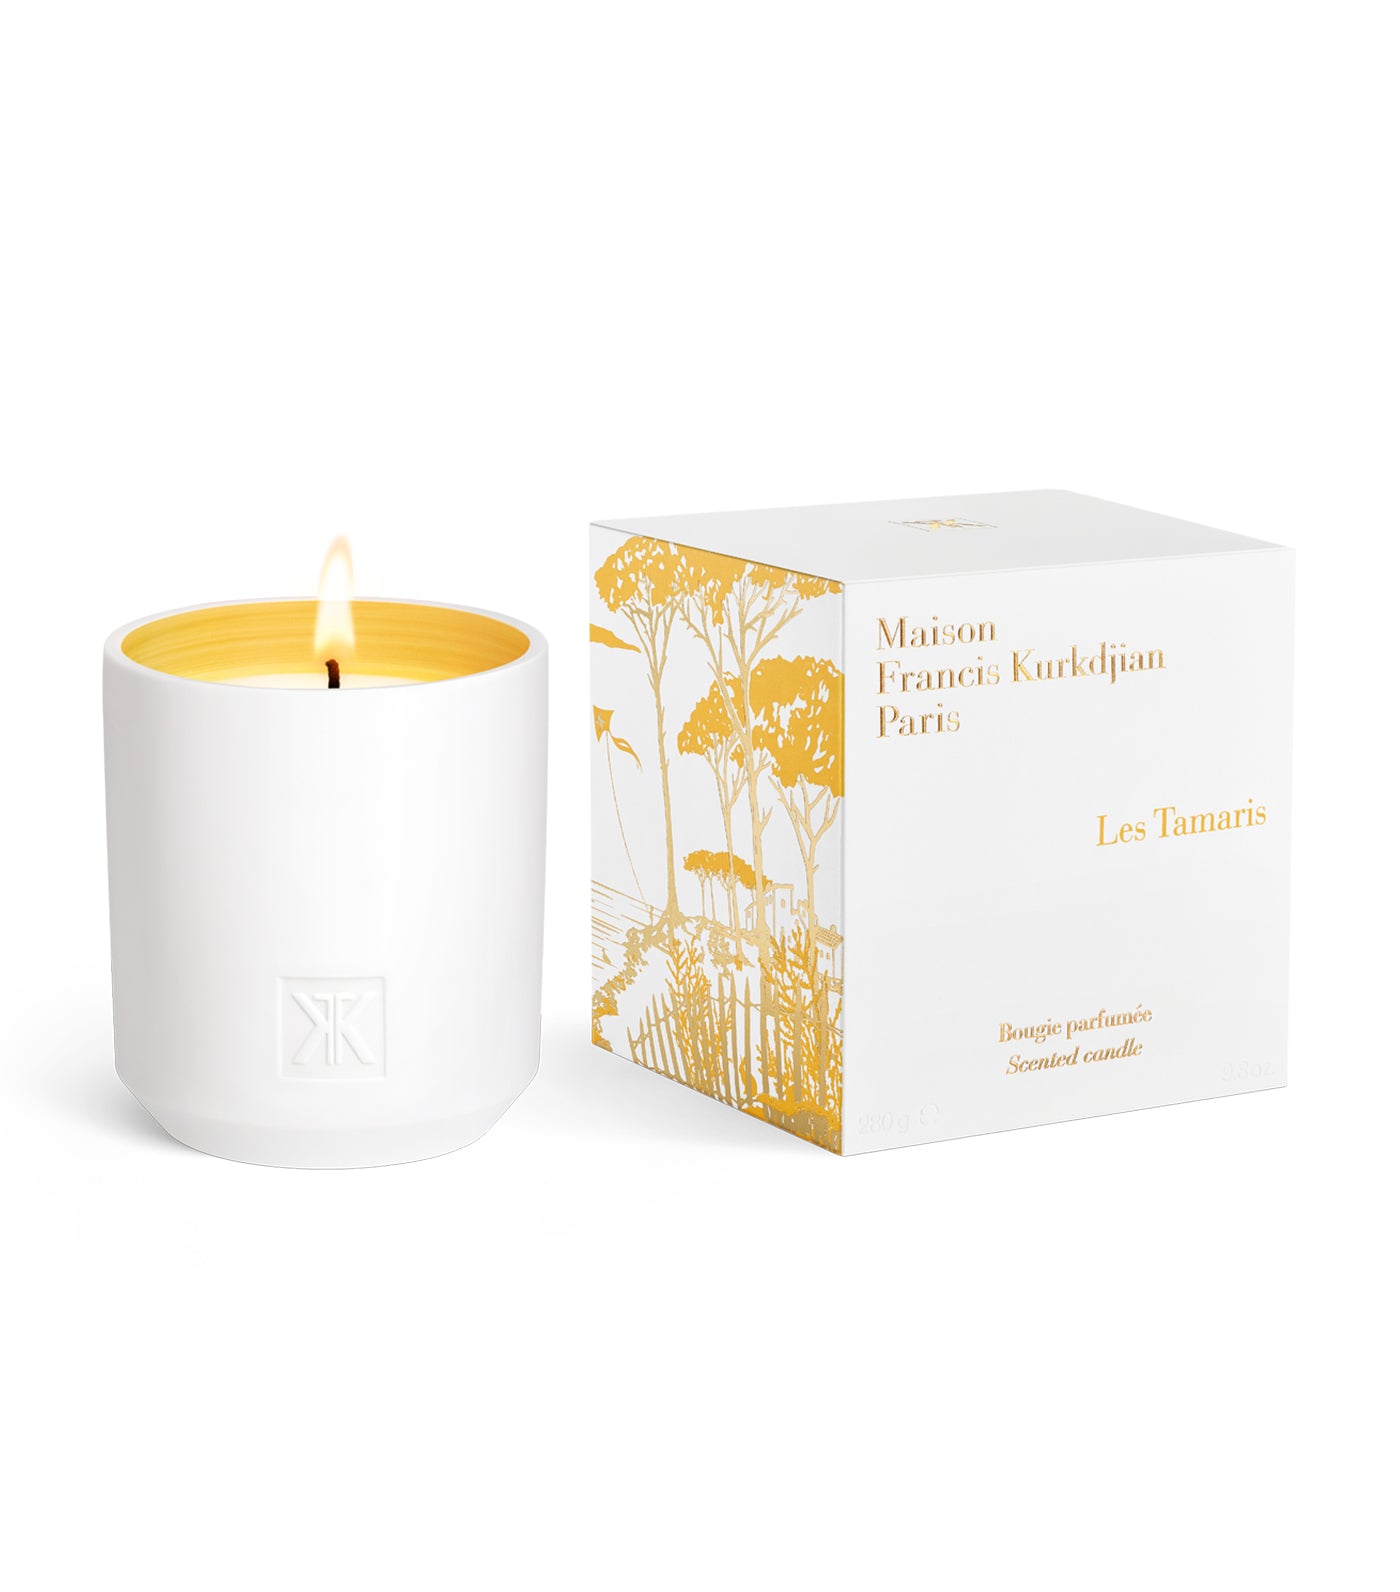 Les Tamaris scented candle